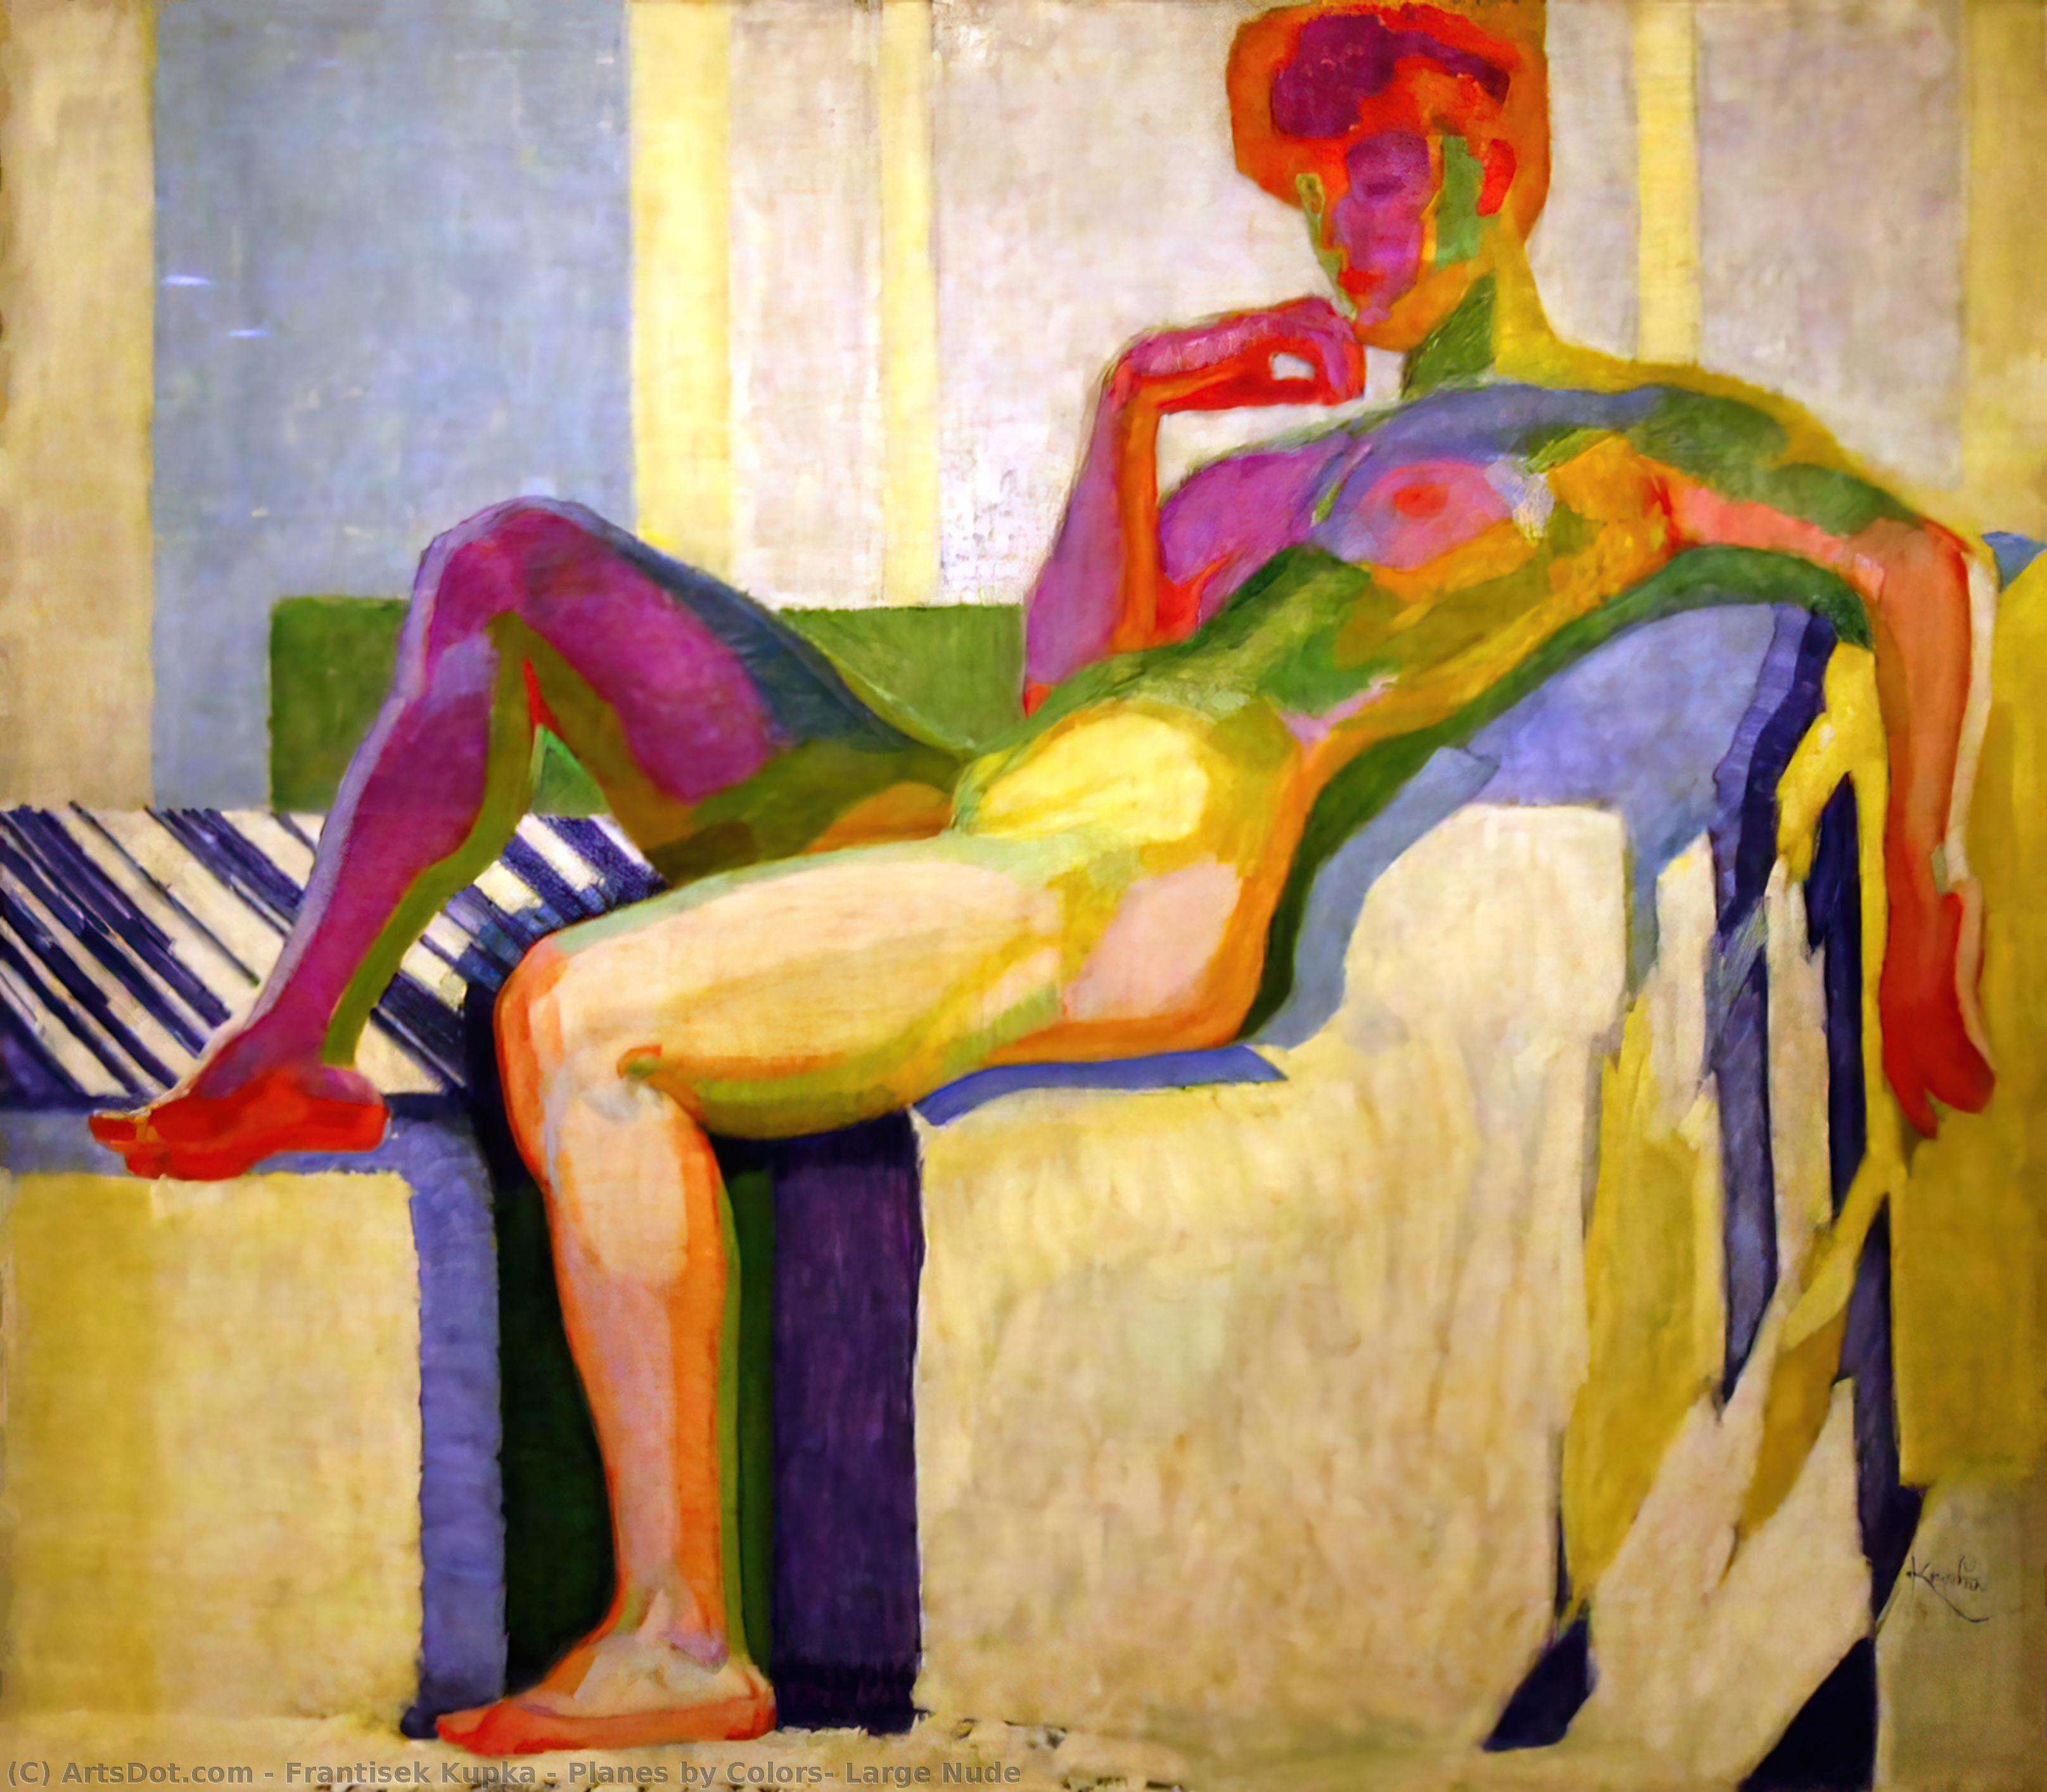 WikiOO.org - دایره المعارف هنرهای زیبا - نقاشی، آثار هنری Frantisek Kupka - Planes by Colors, Large Nude